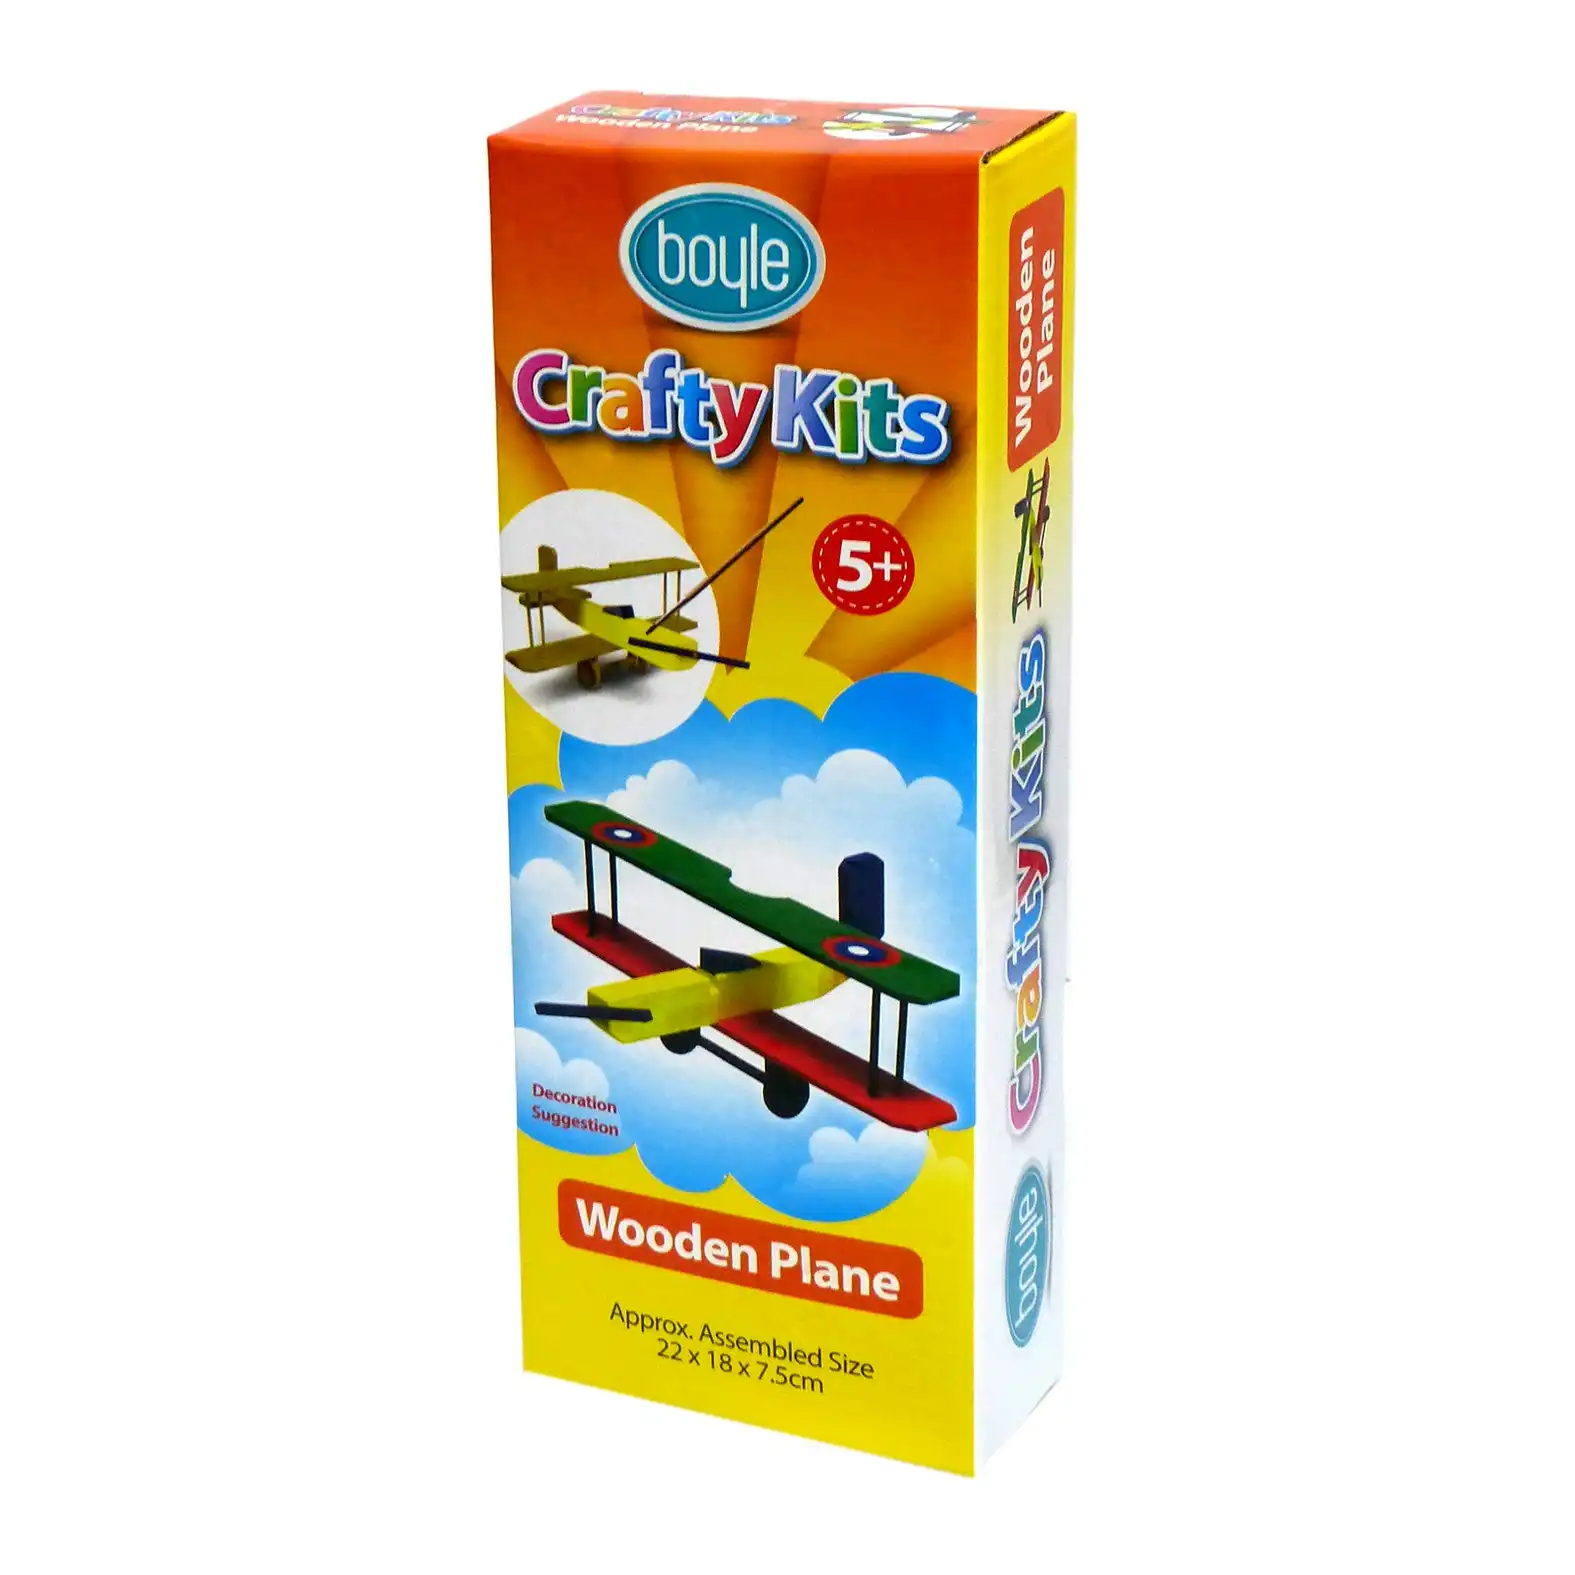 Boyle Crafty Kits Build & Paint Wooden Plane Kids/Children Activity Toy 5y+